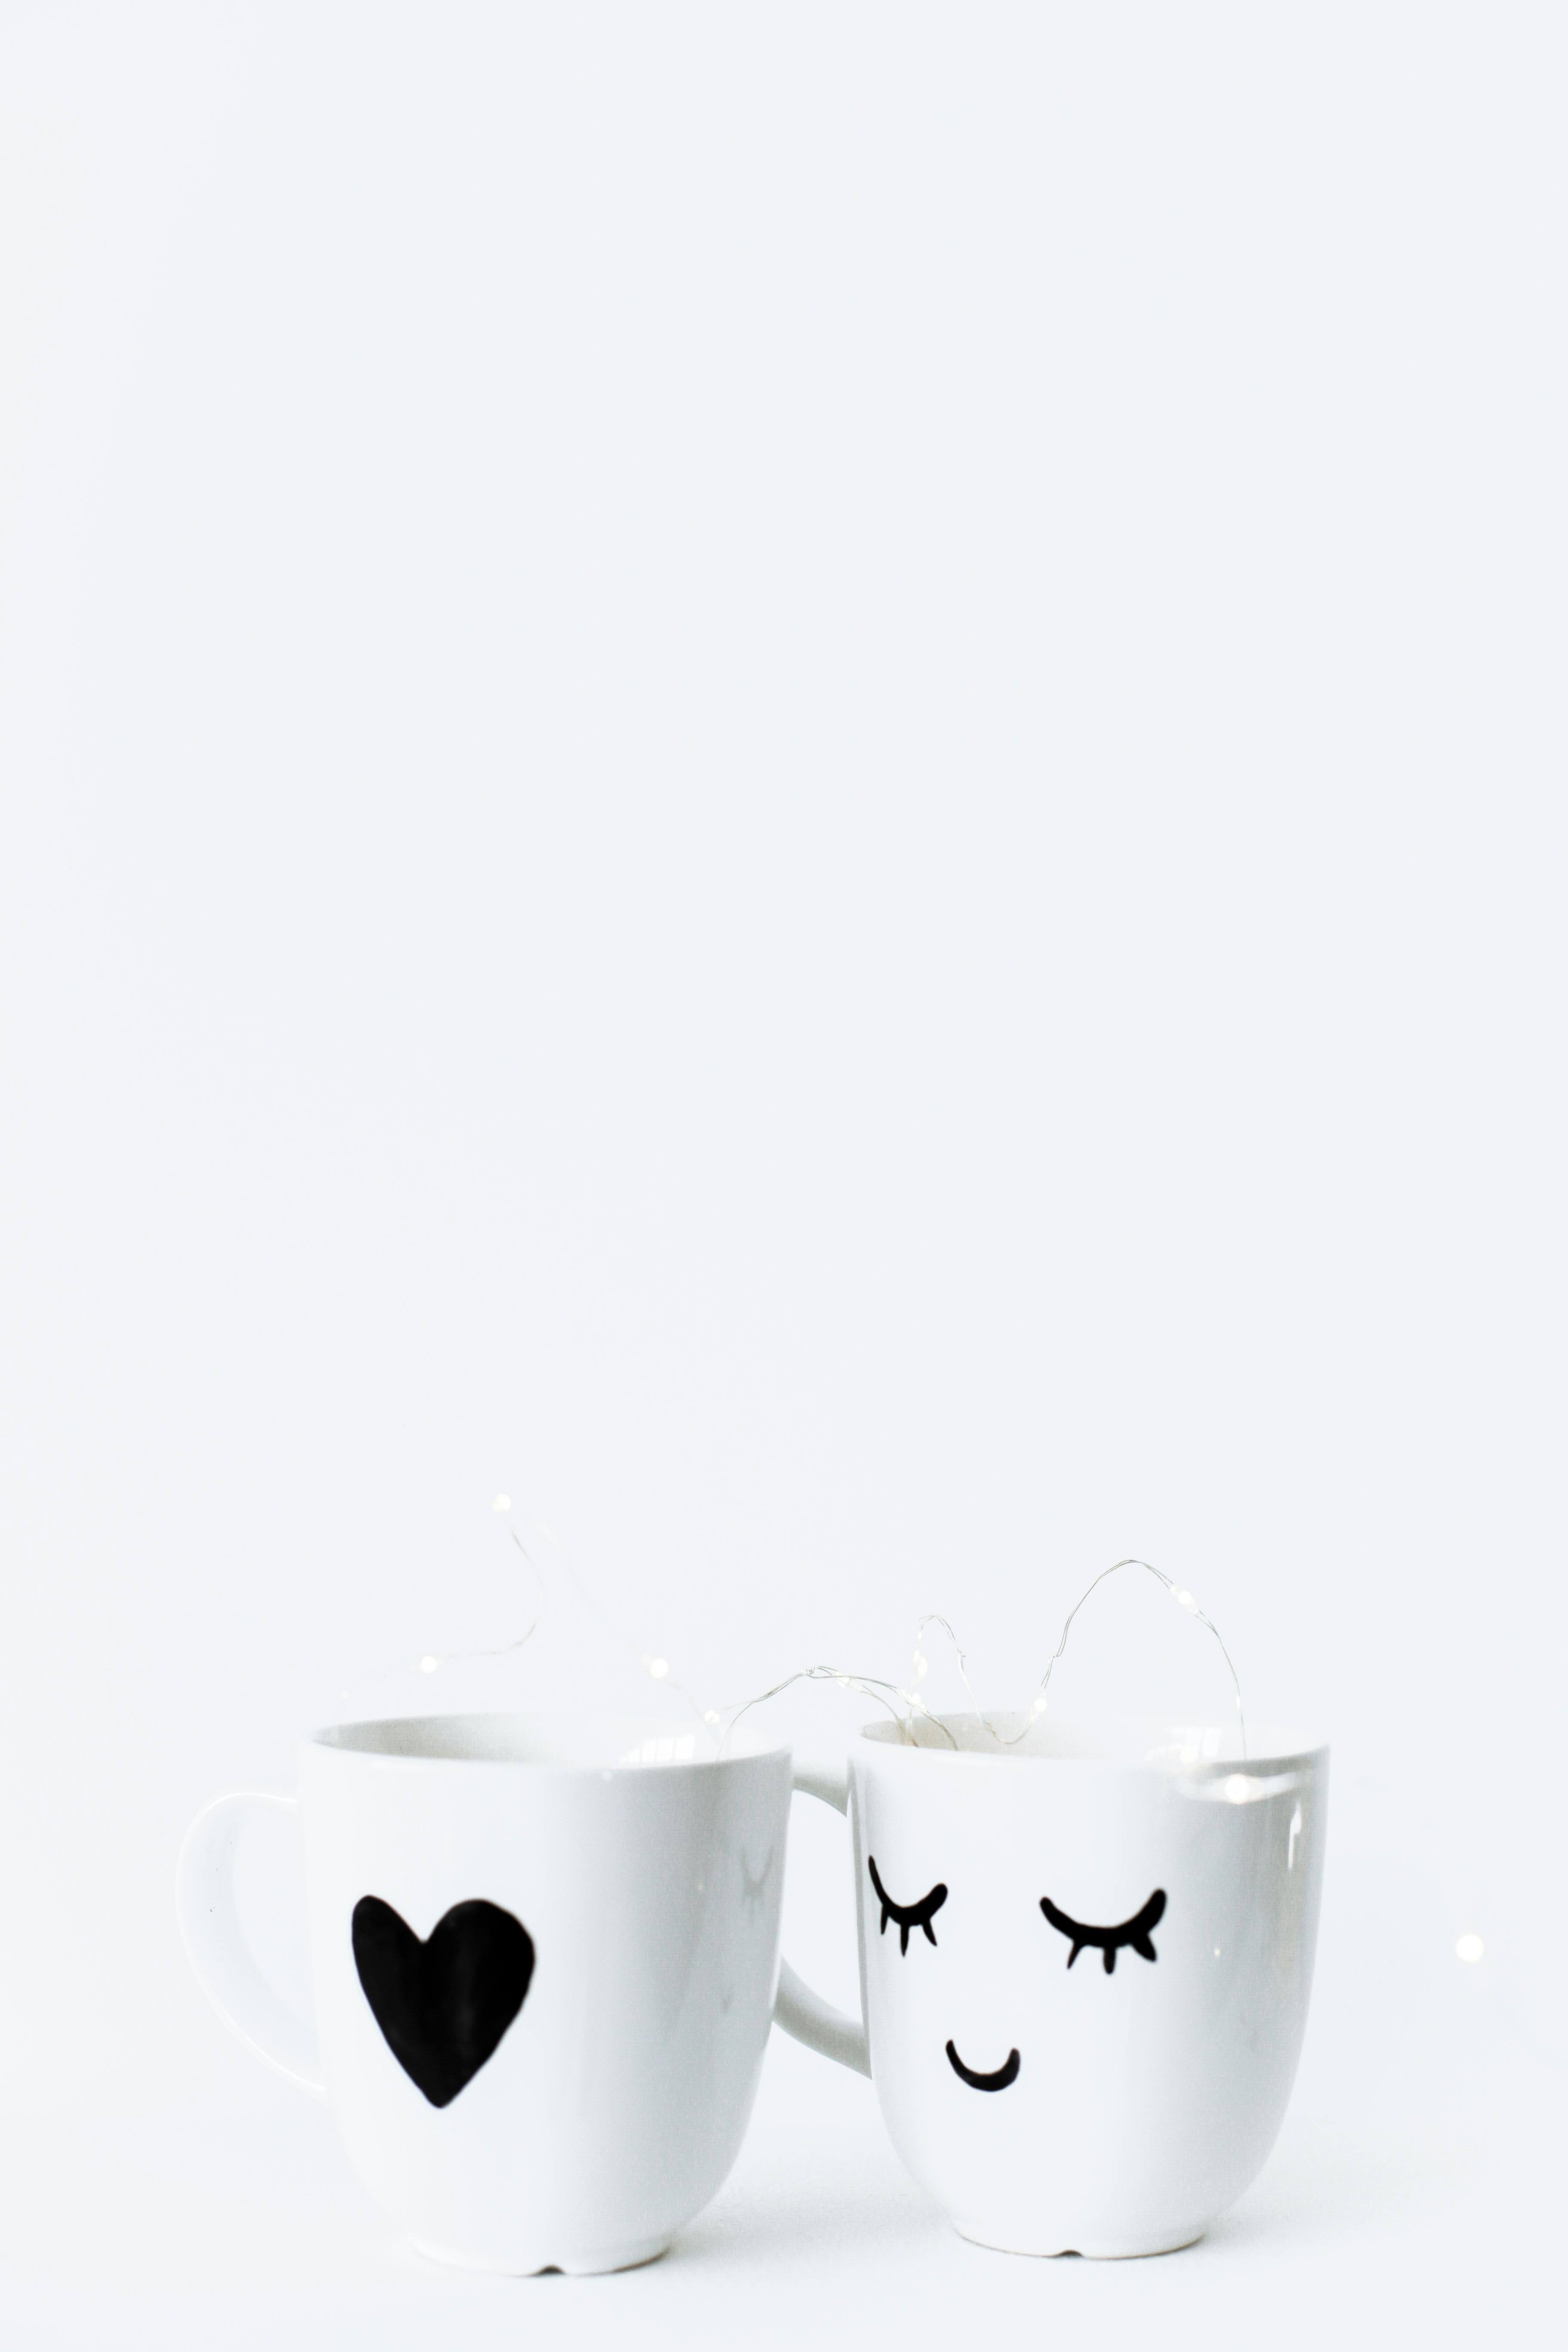 creative white mugs on white surface